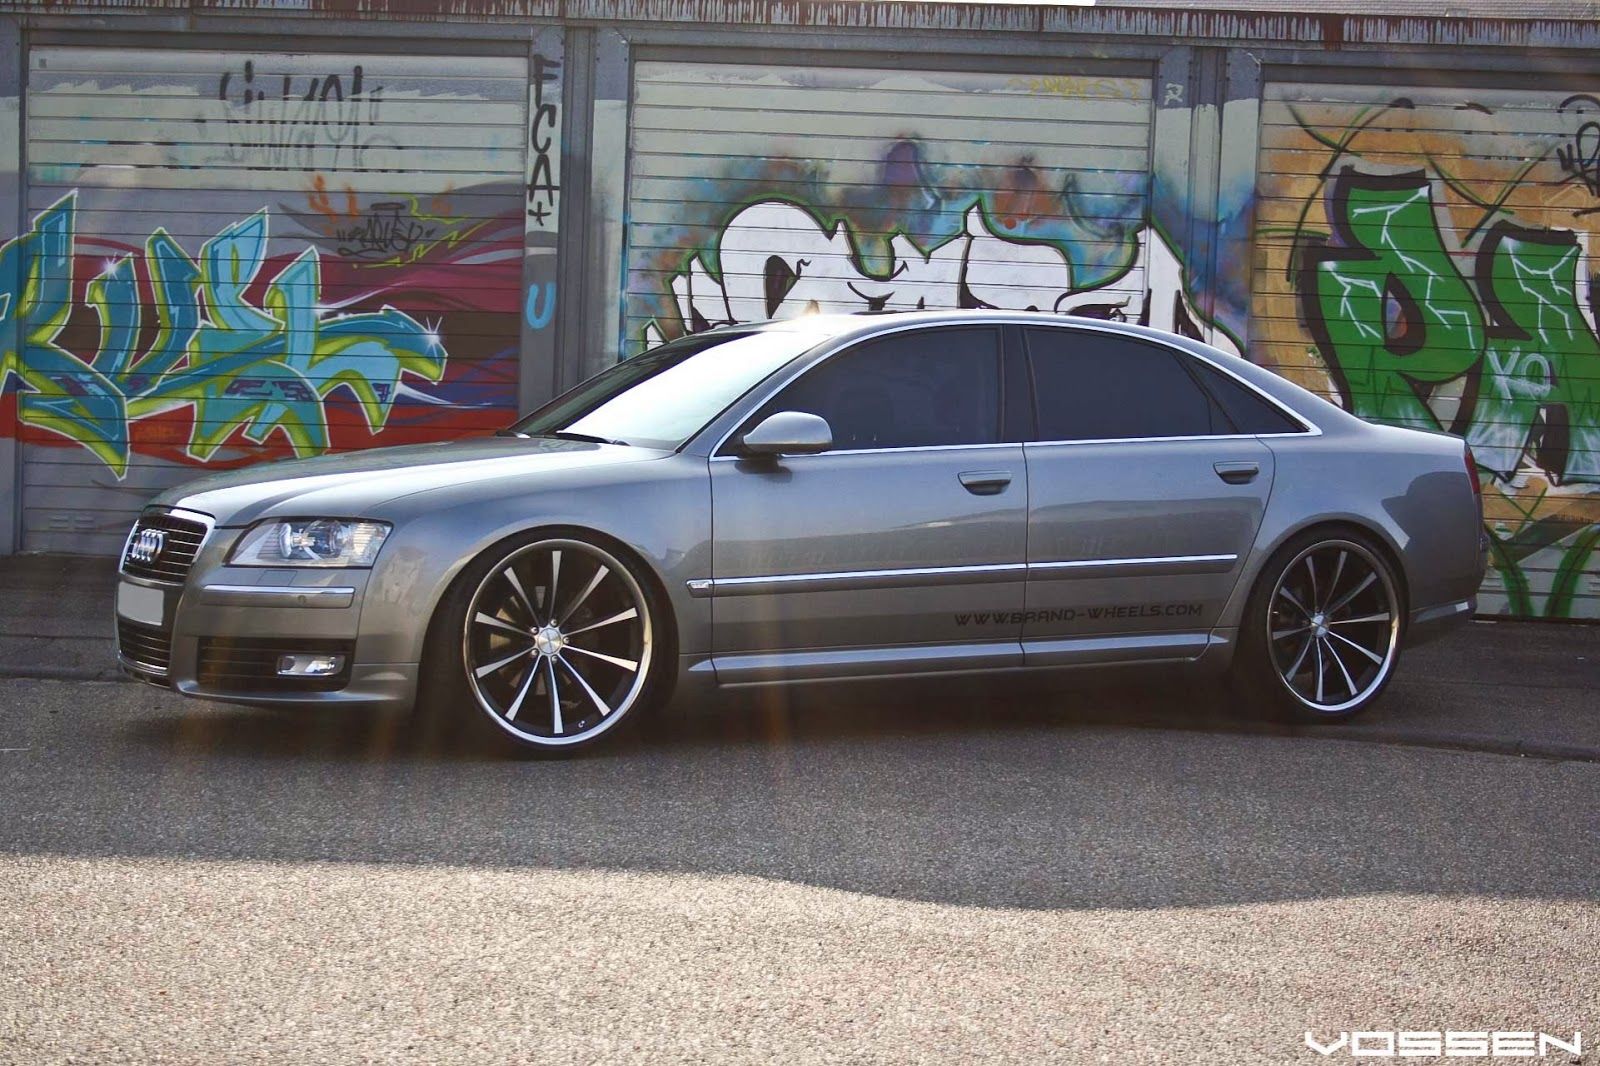 Car Wallpaper and Videos: Audi A8 Tuning Wallpaper